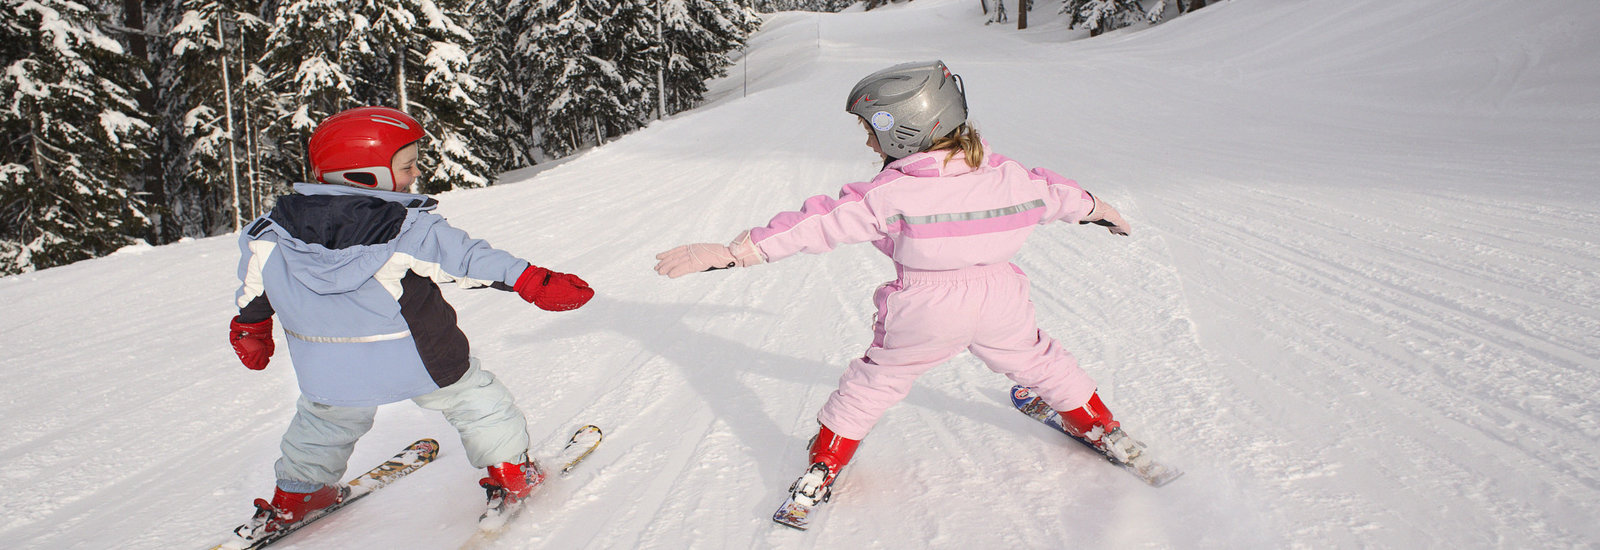 Lean To Ski or Snowboard